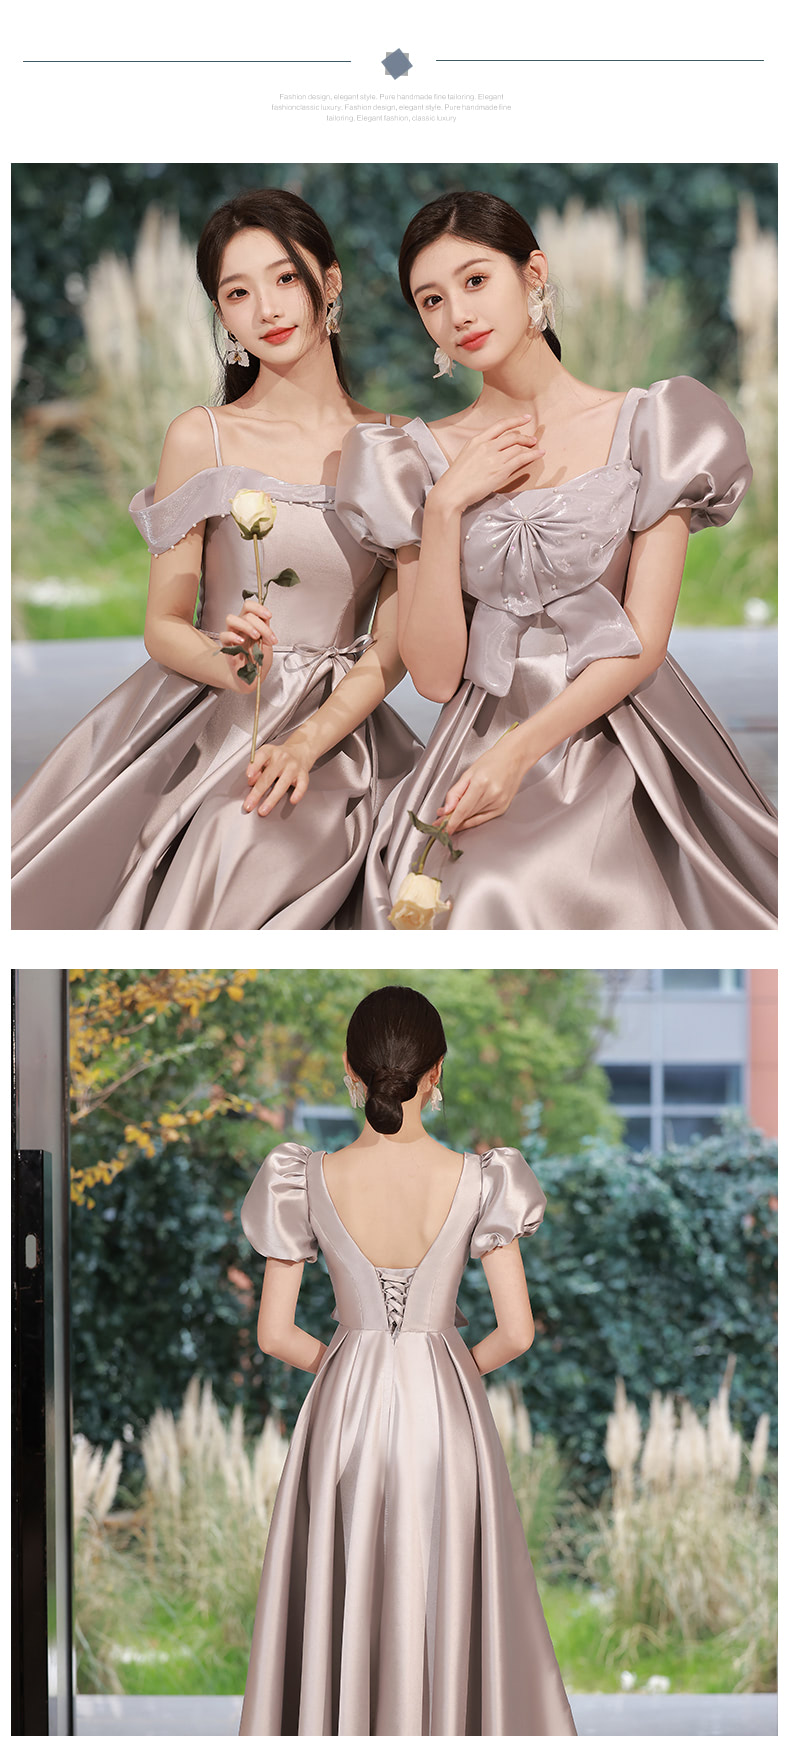 Grey-Satin-Bridesmaid-Evening-Wedding-Party-Long-Dress-Ball-Gown12.jpg